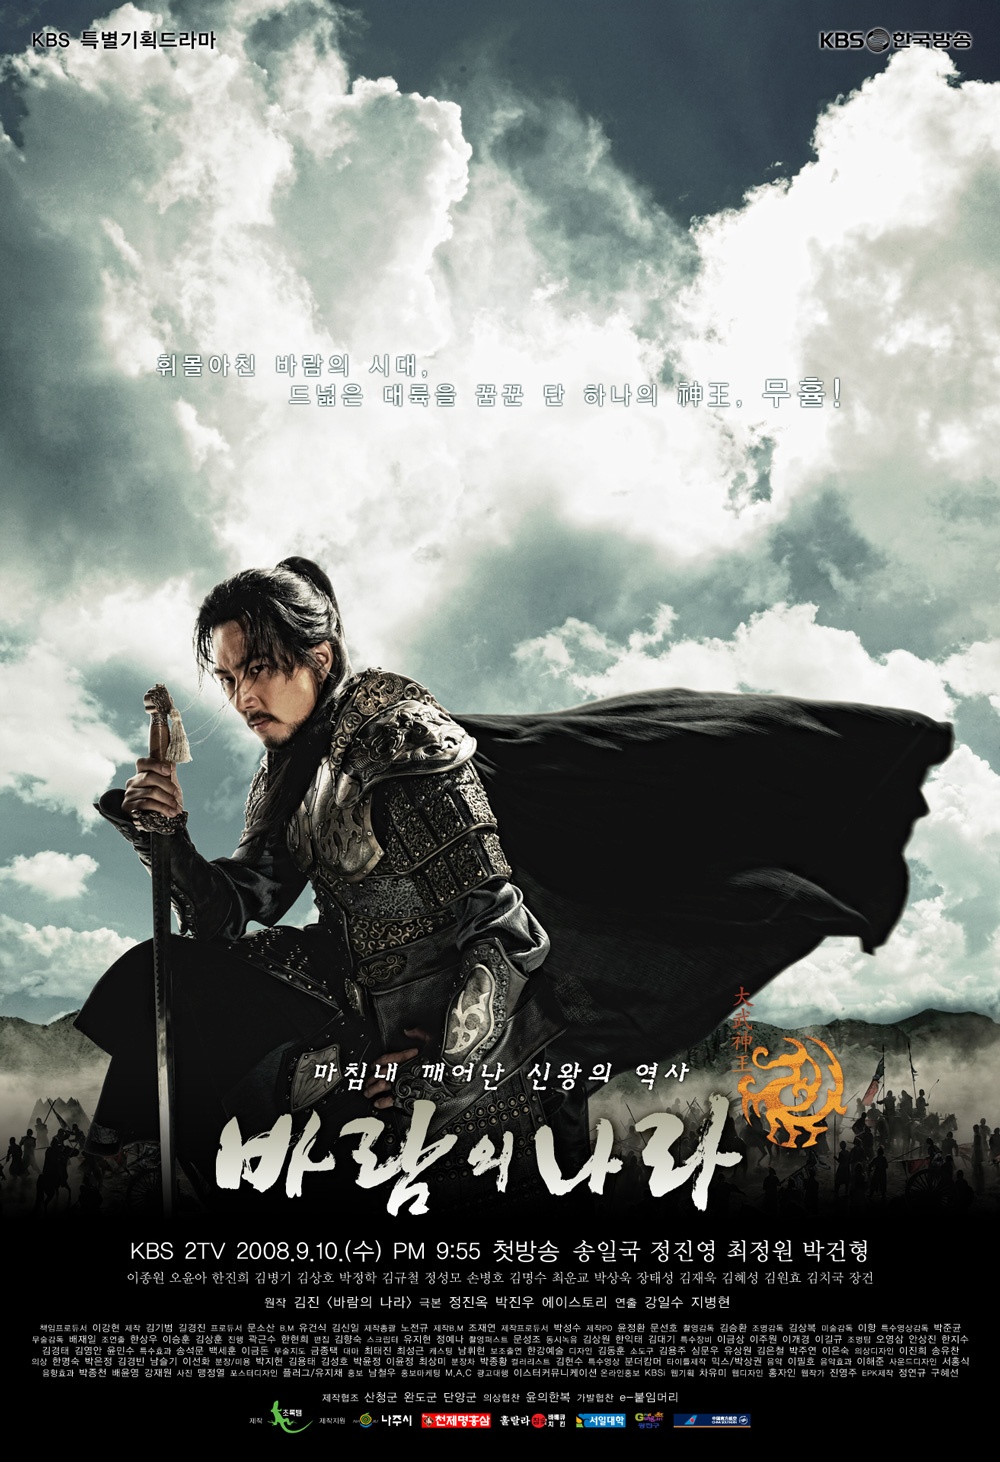 DOWNLOAD: Kingdom Of The Wind Season 1 (COMPLETE) [Korean Drama] |  TOOXTRALOADED